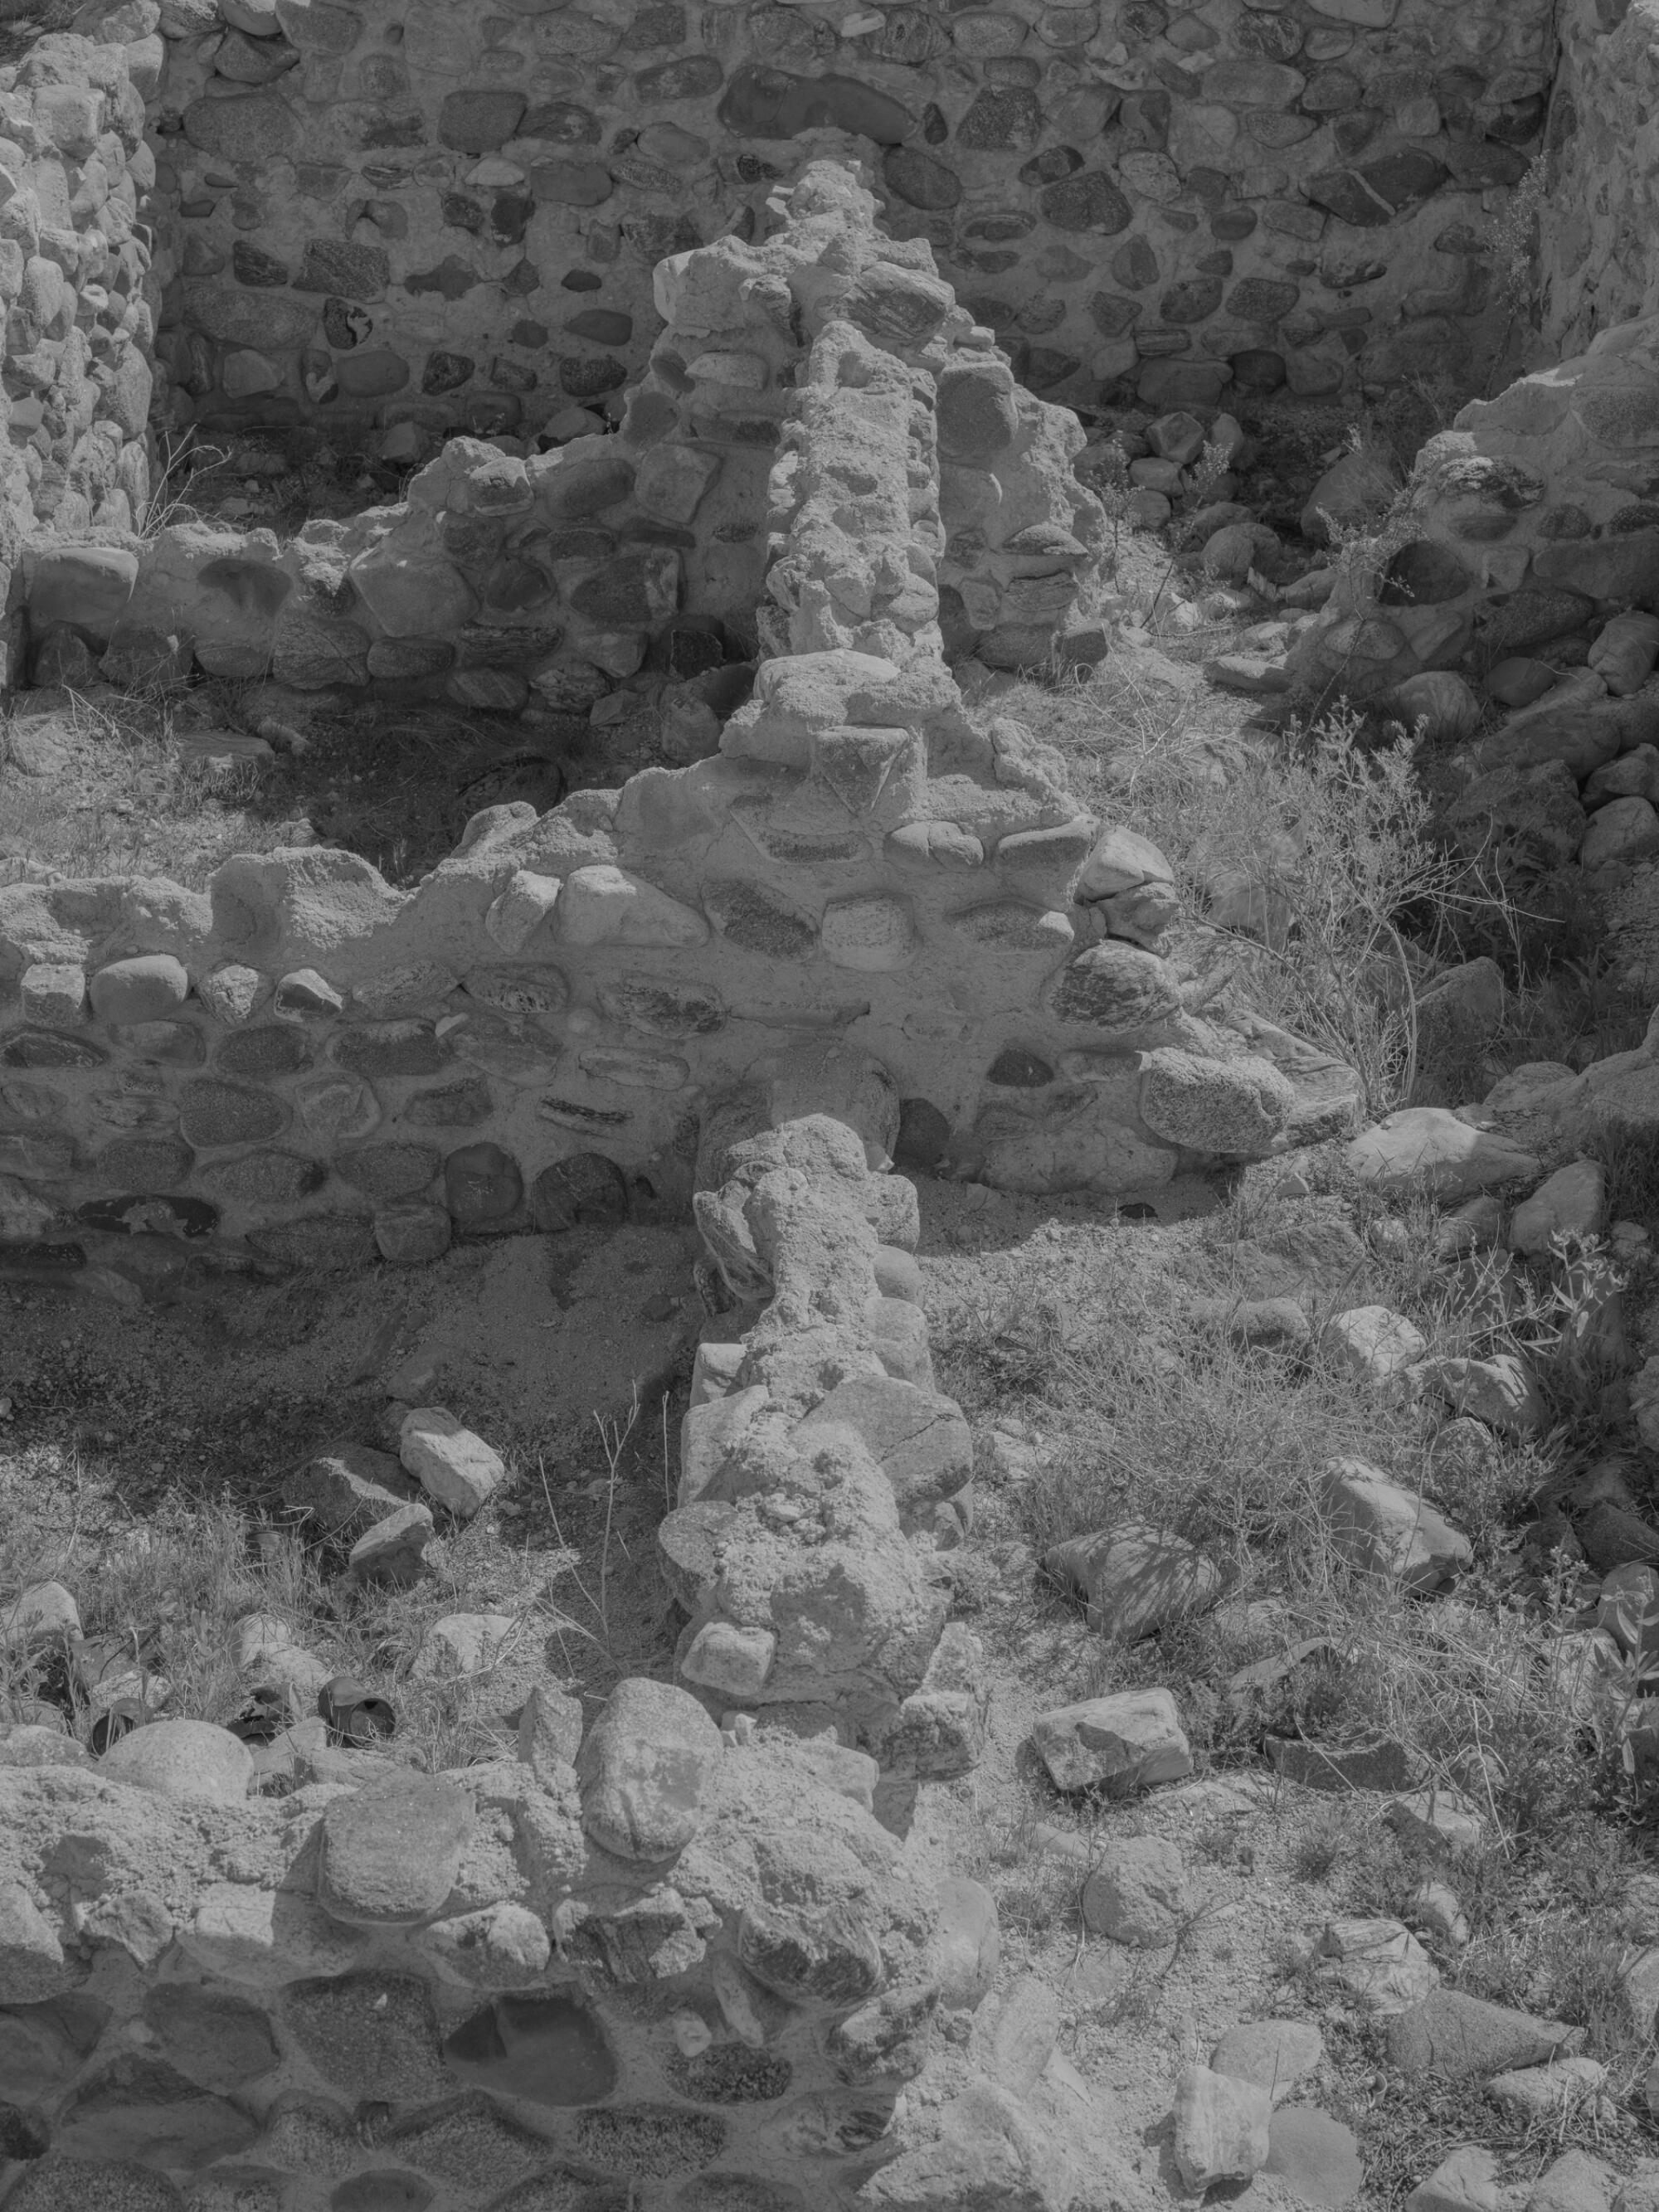 A closeup image of the stone ruins.